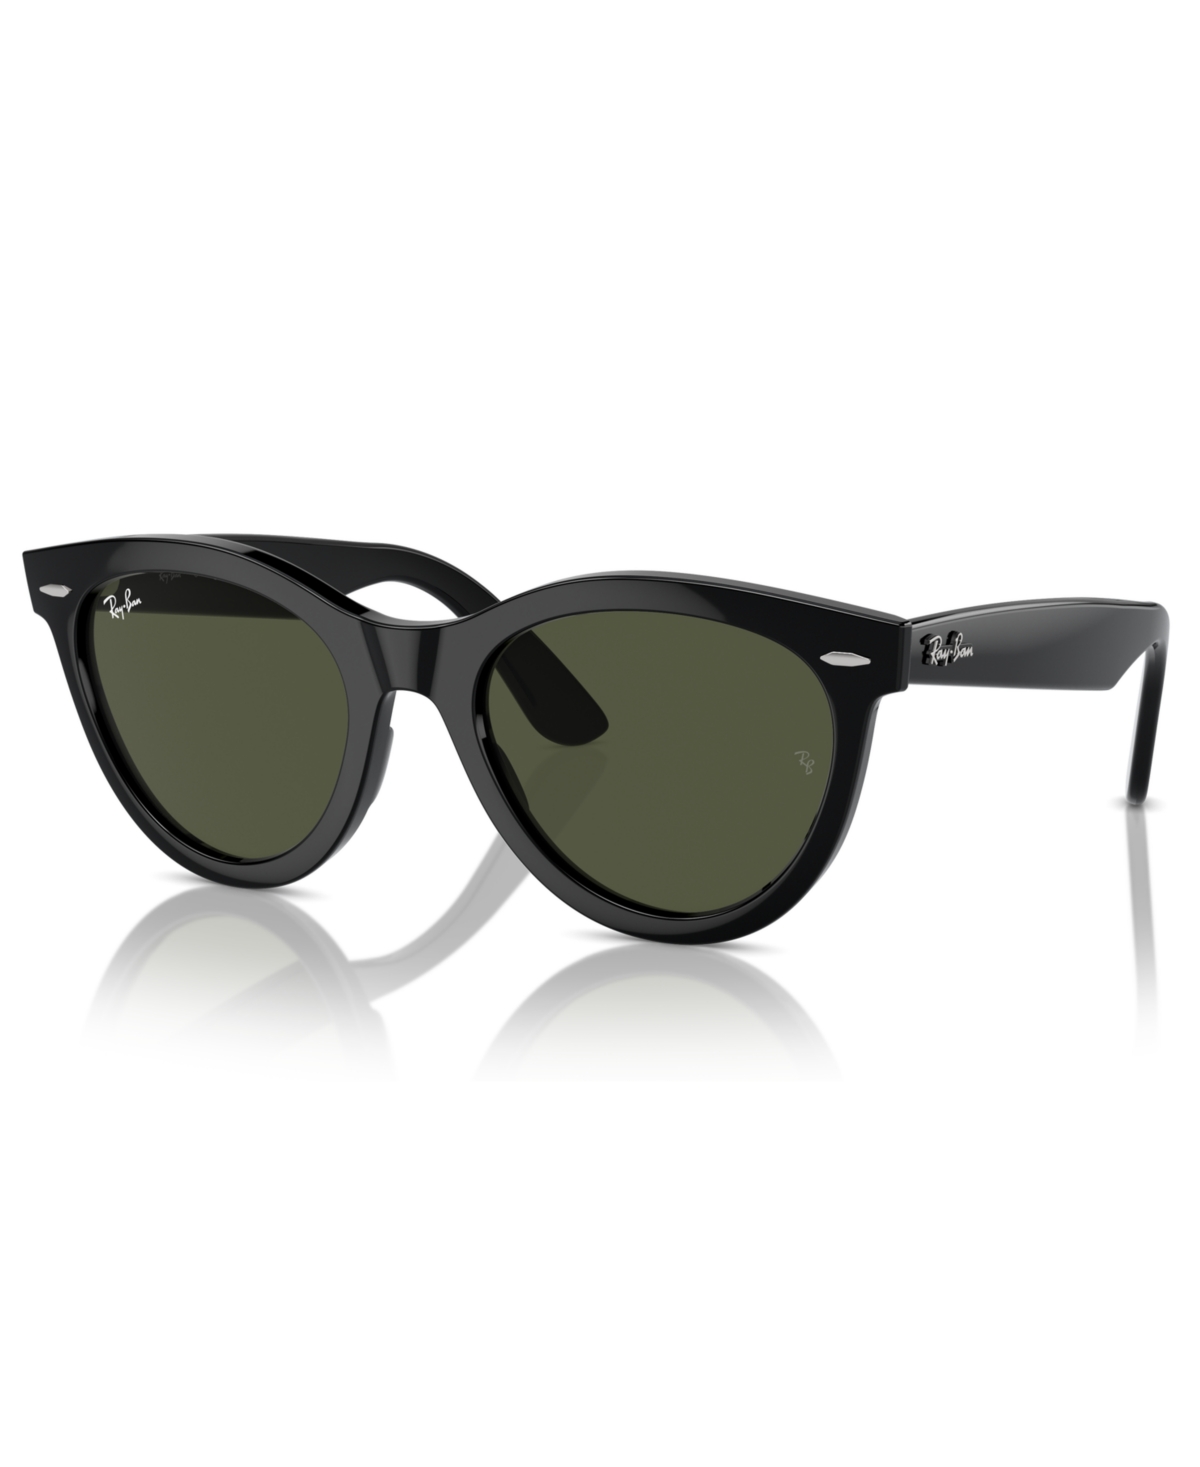 Unisex Sunglasses, Wayfarer Way Rb2241 - Black